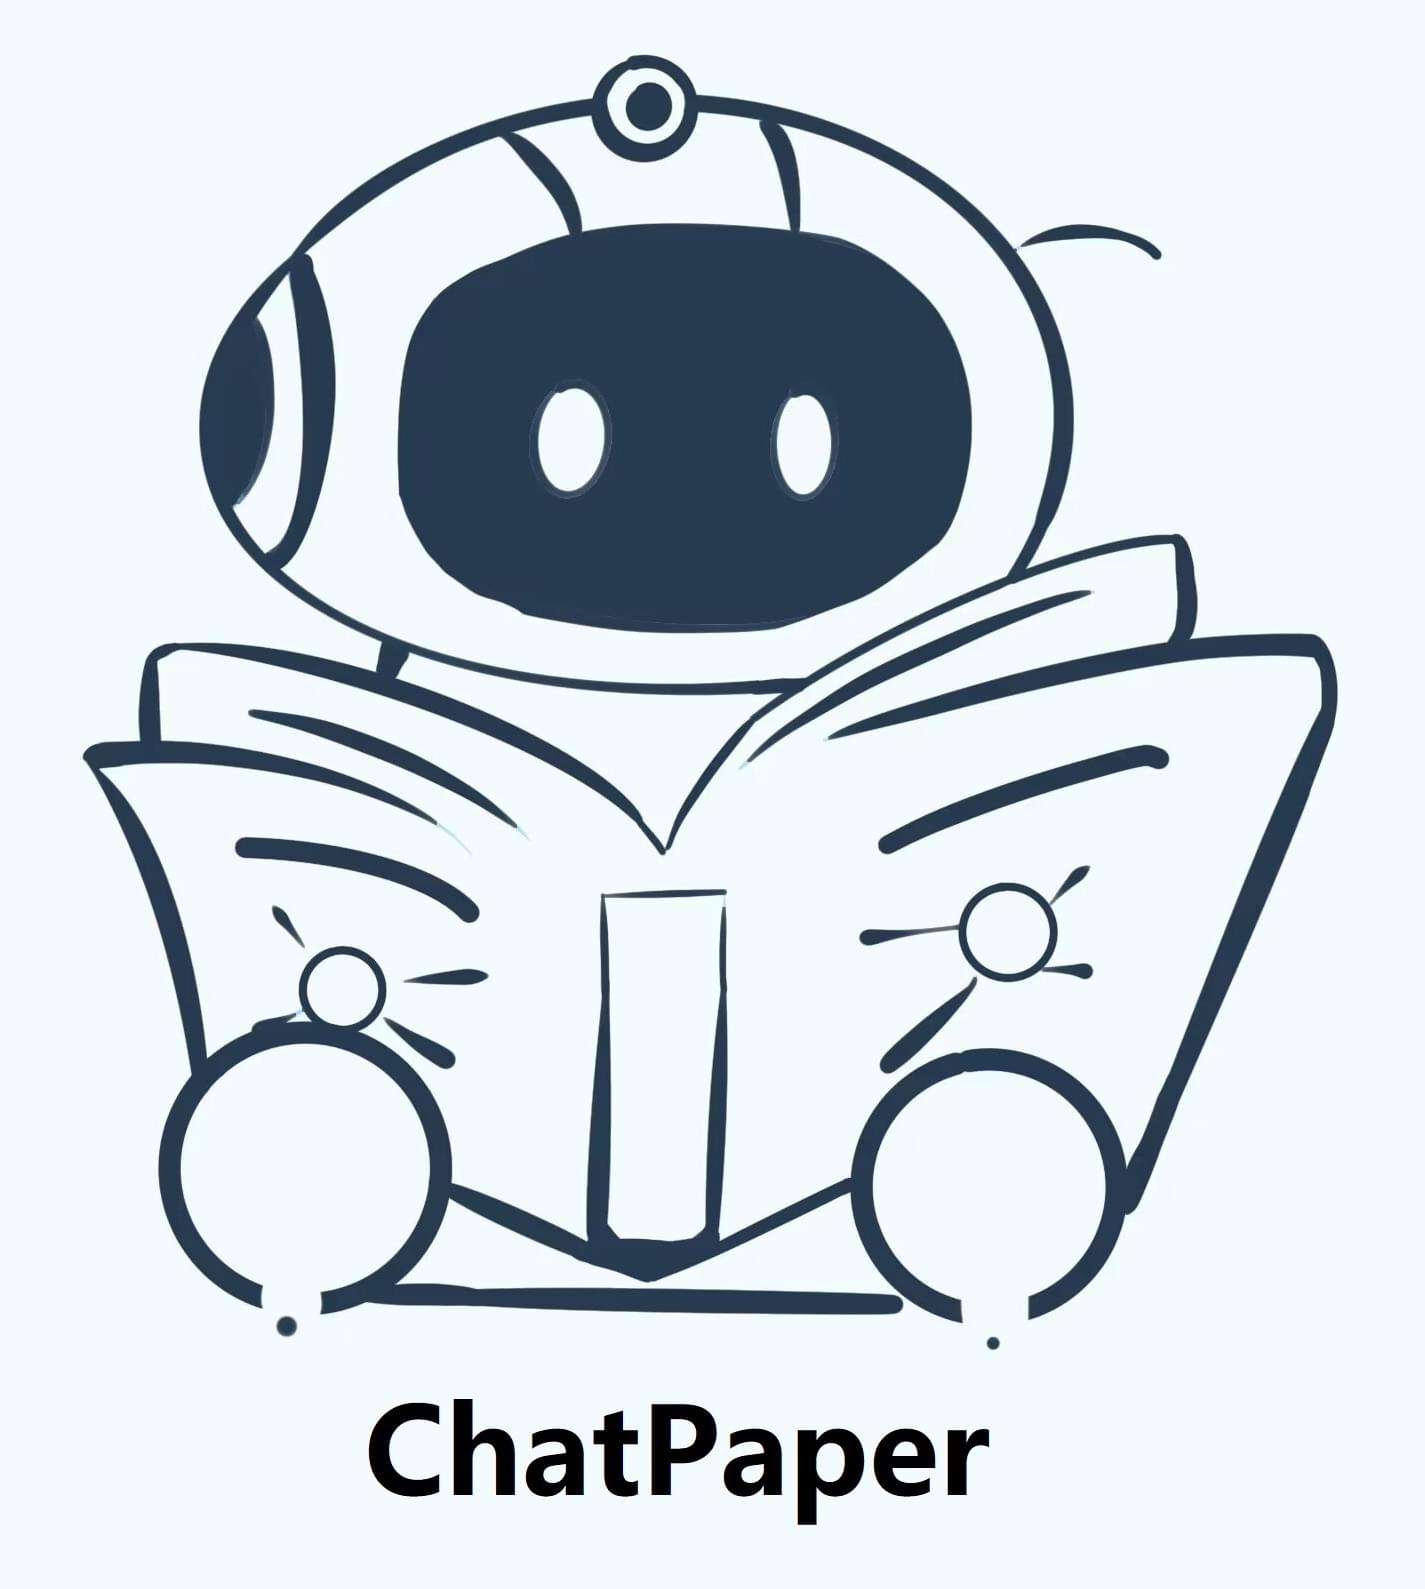 ChatPaper